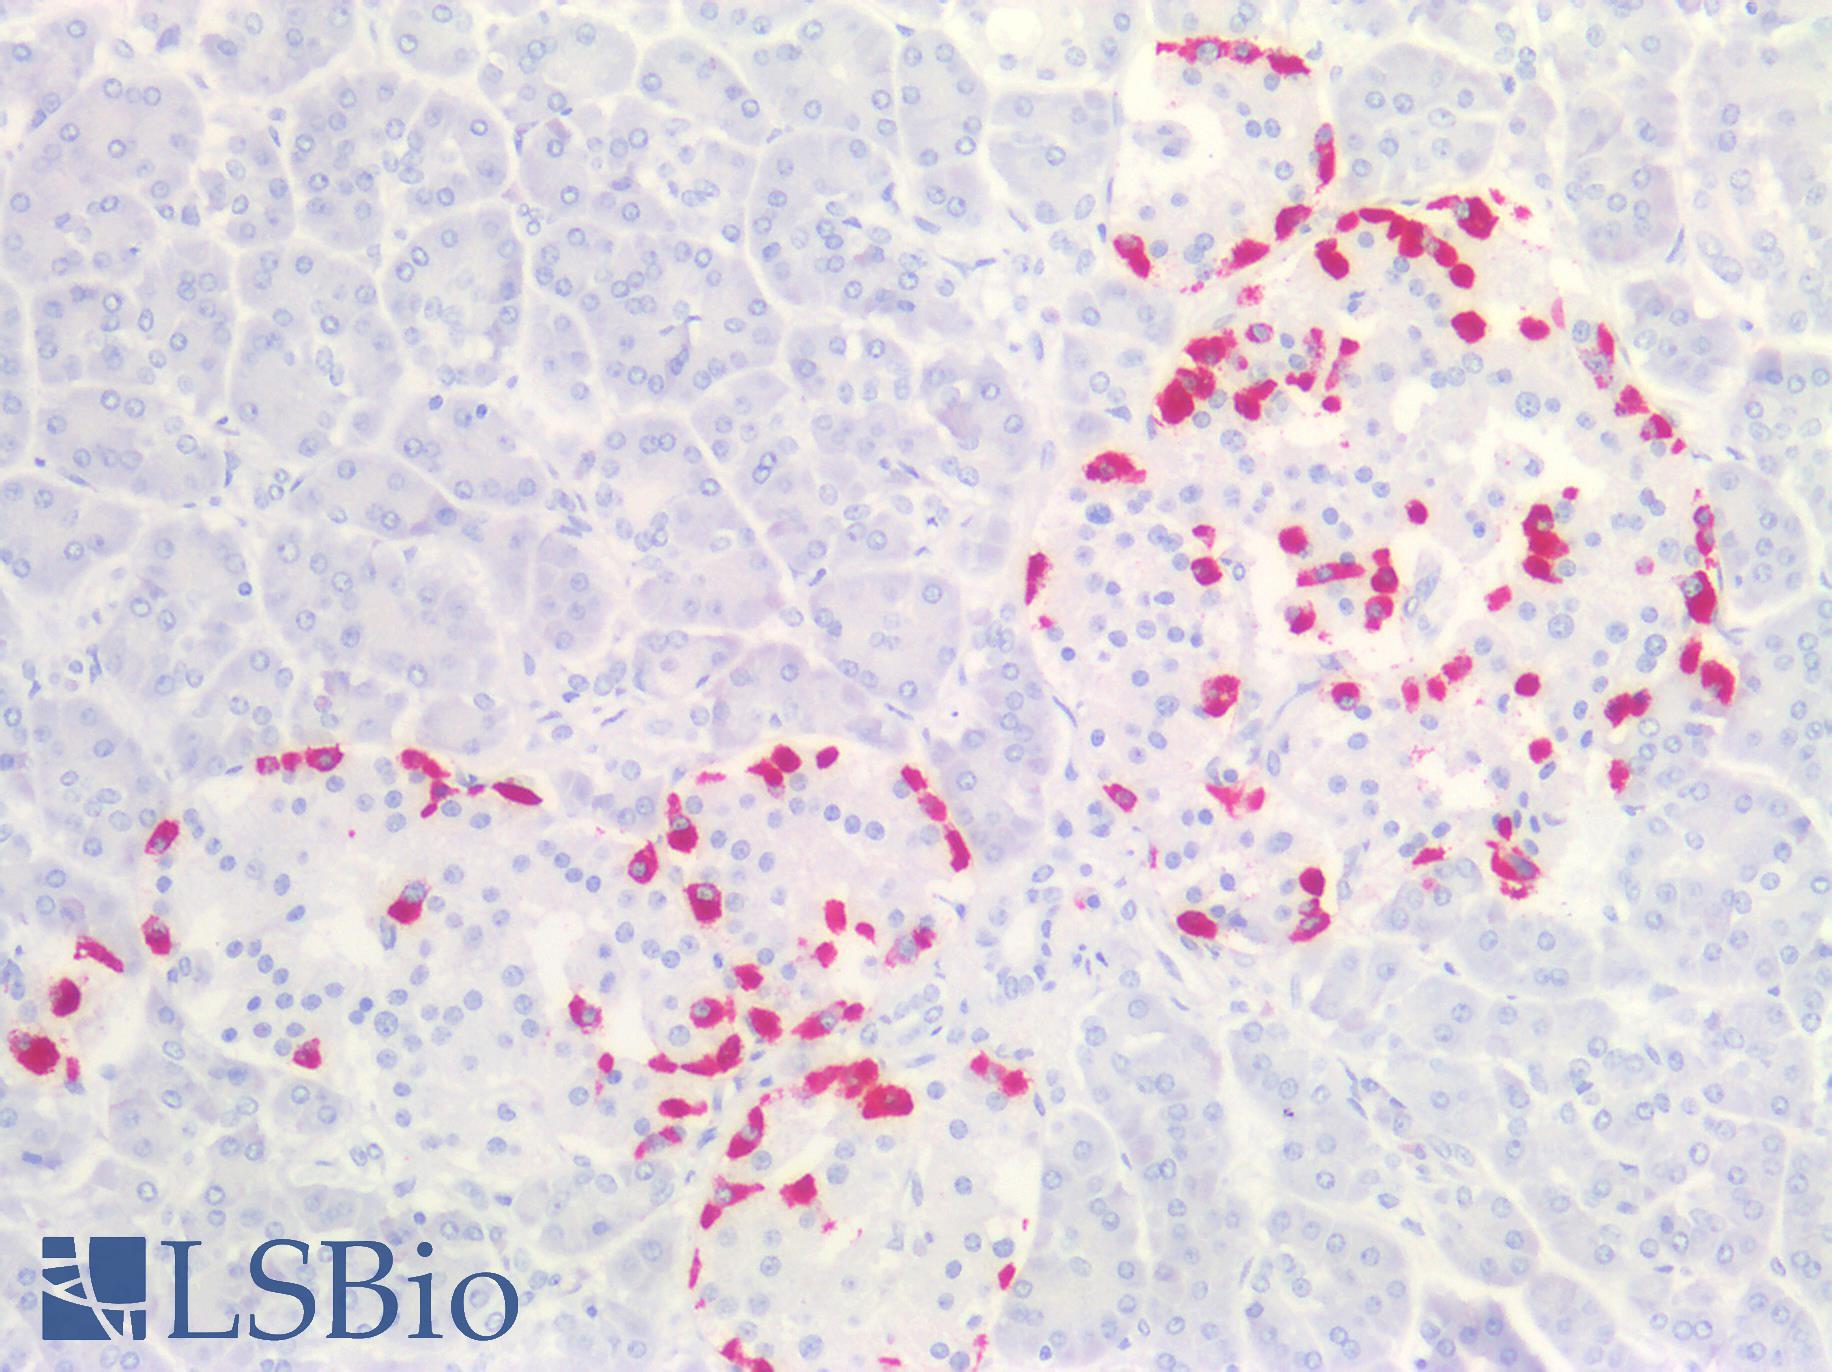 GCG / Glucagon Antibody - Human Pancreas: Formalin-Fixed, Paraffin-Embedded (FFPE)